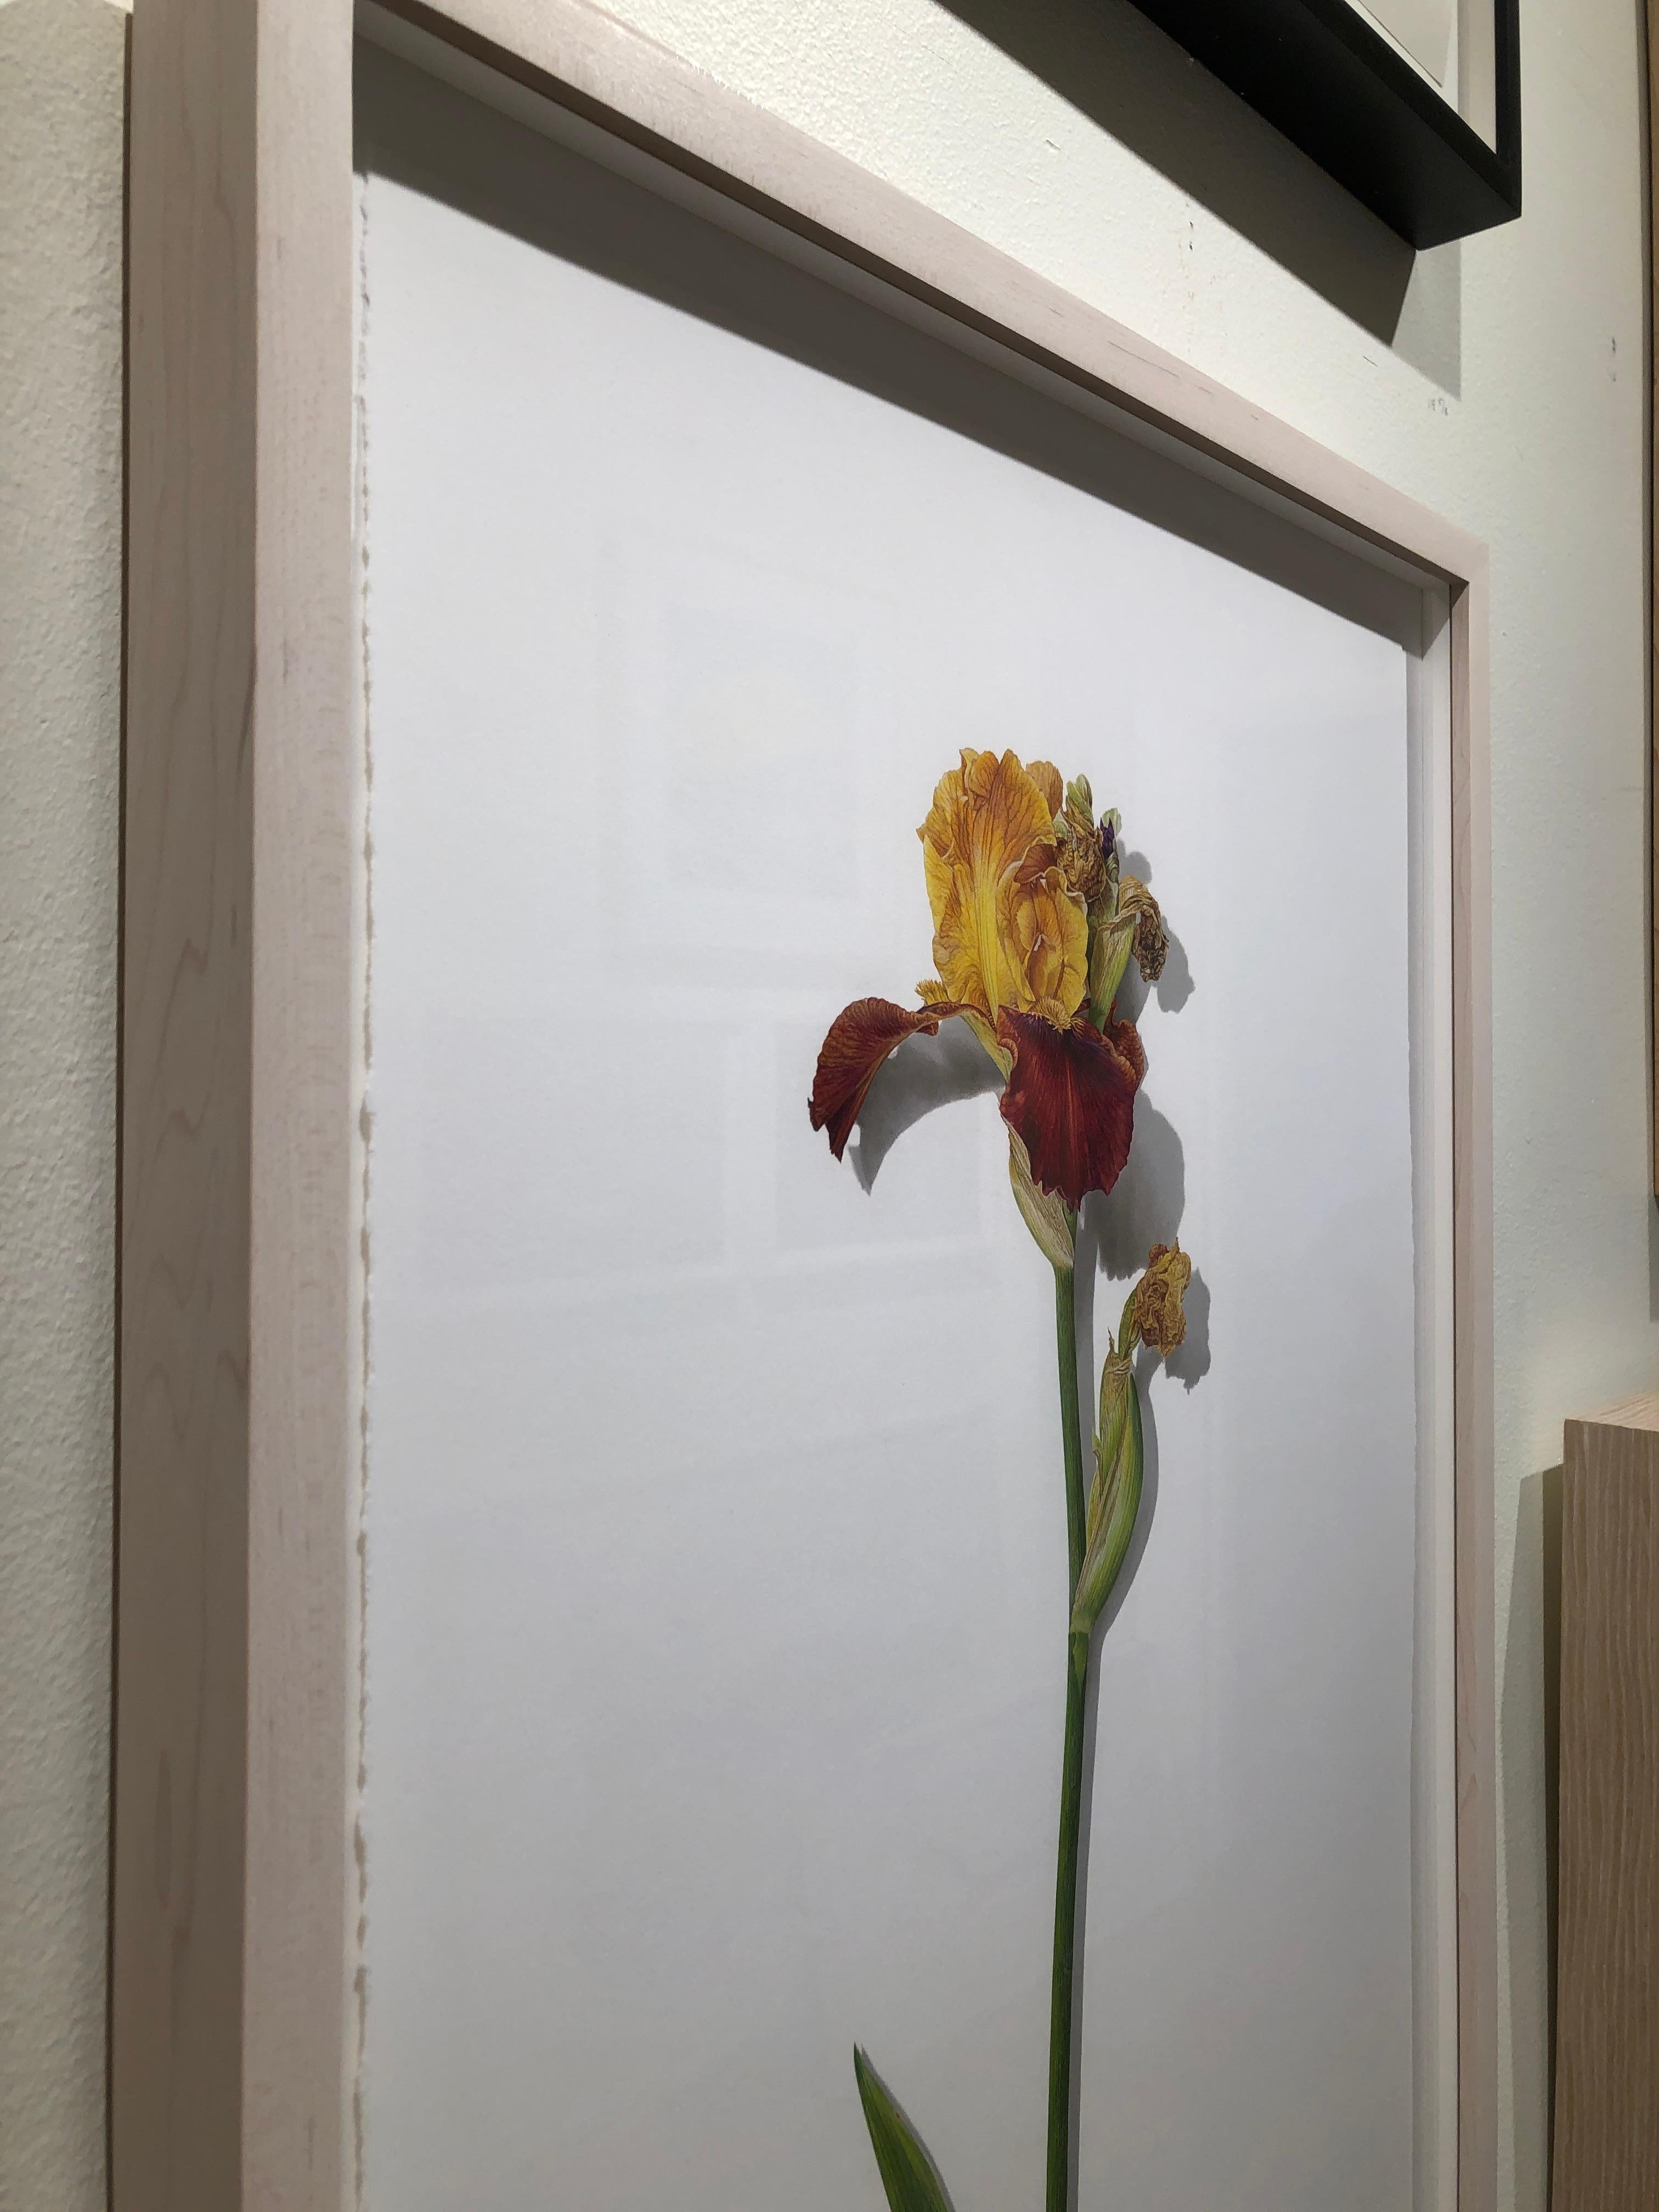 David Morrison, Iris Drawing, hyperrealist colored pencil floral still life 2